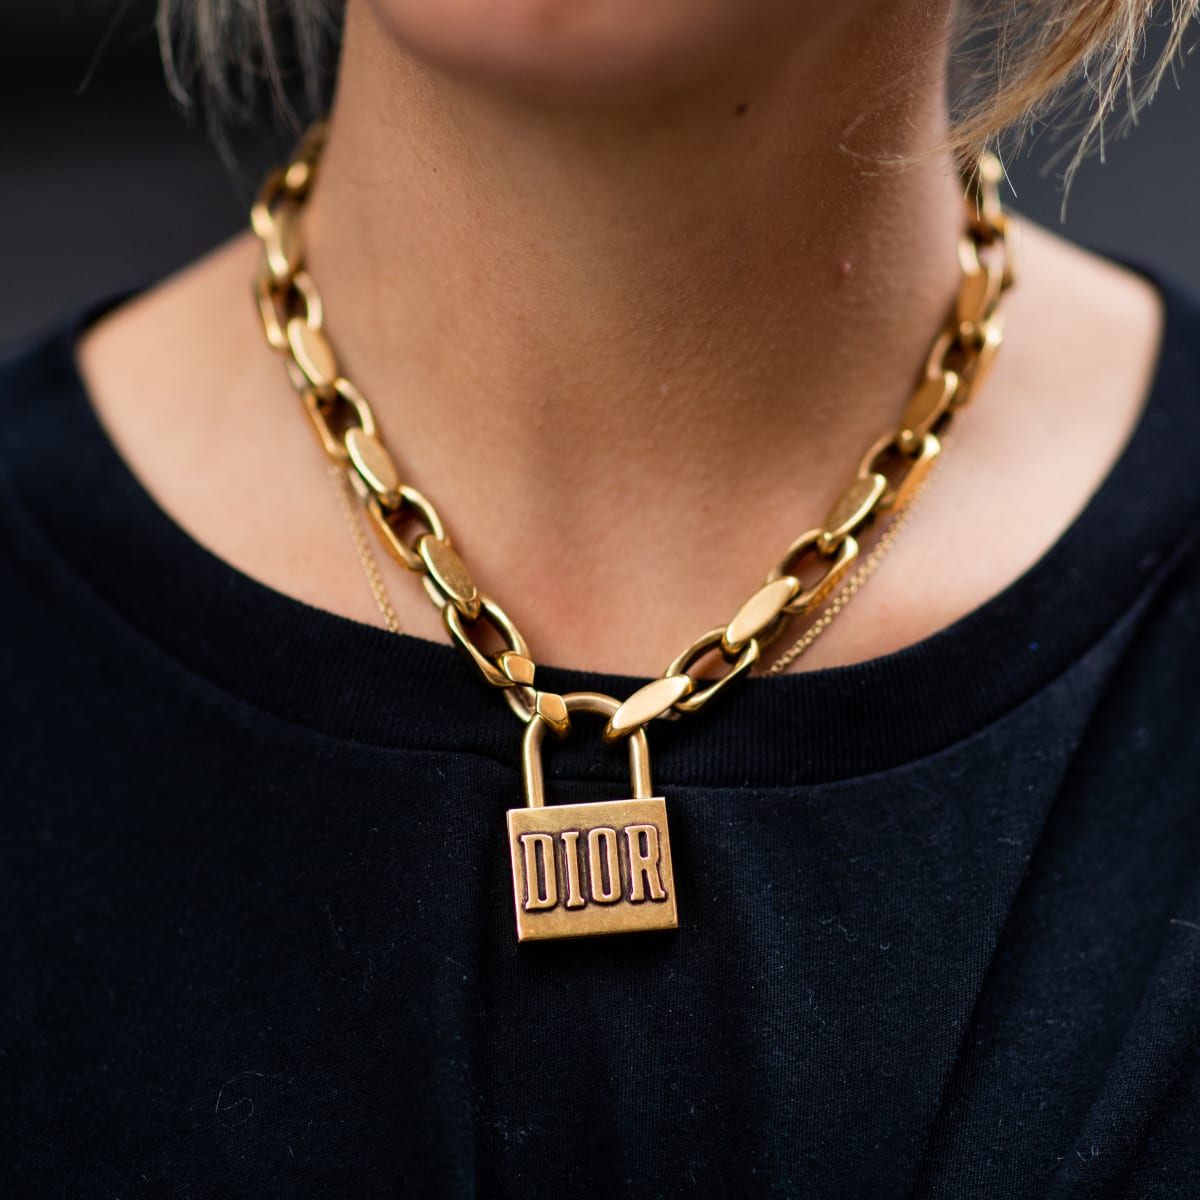 dior lock necklace gold